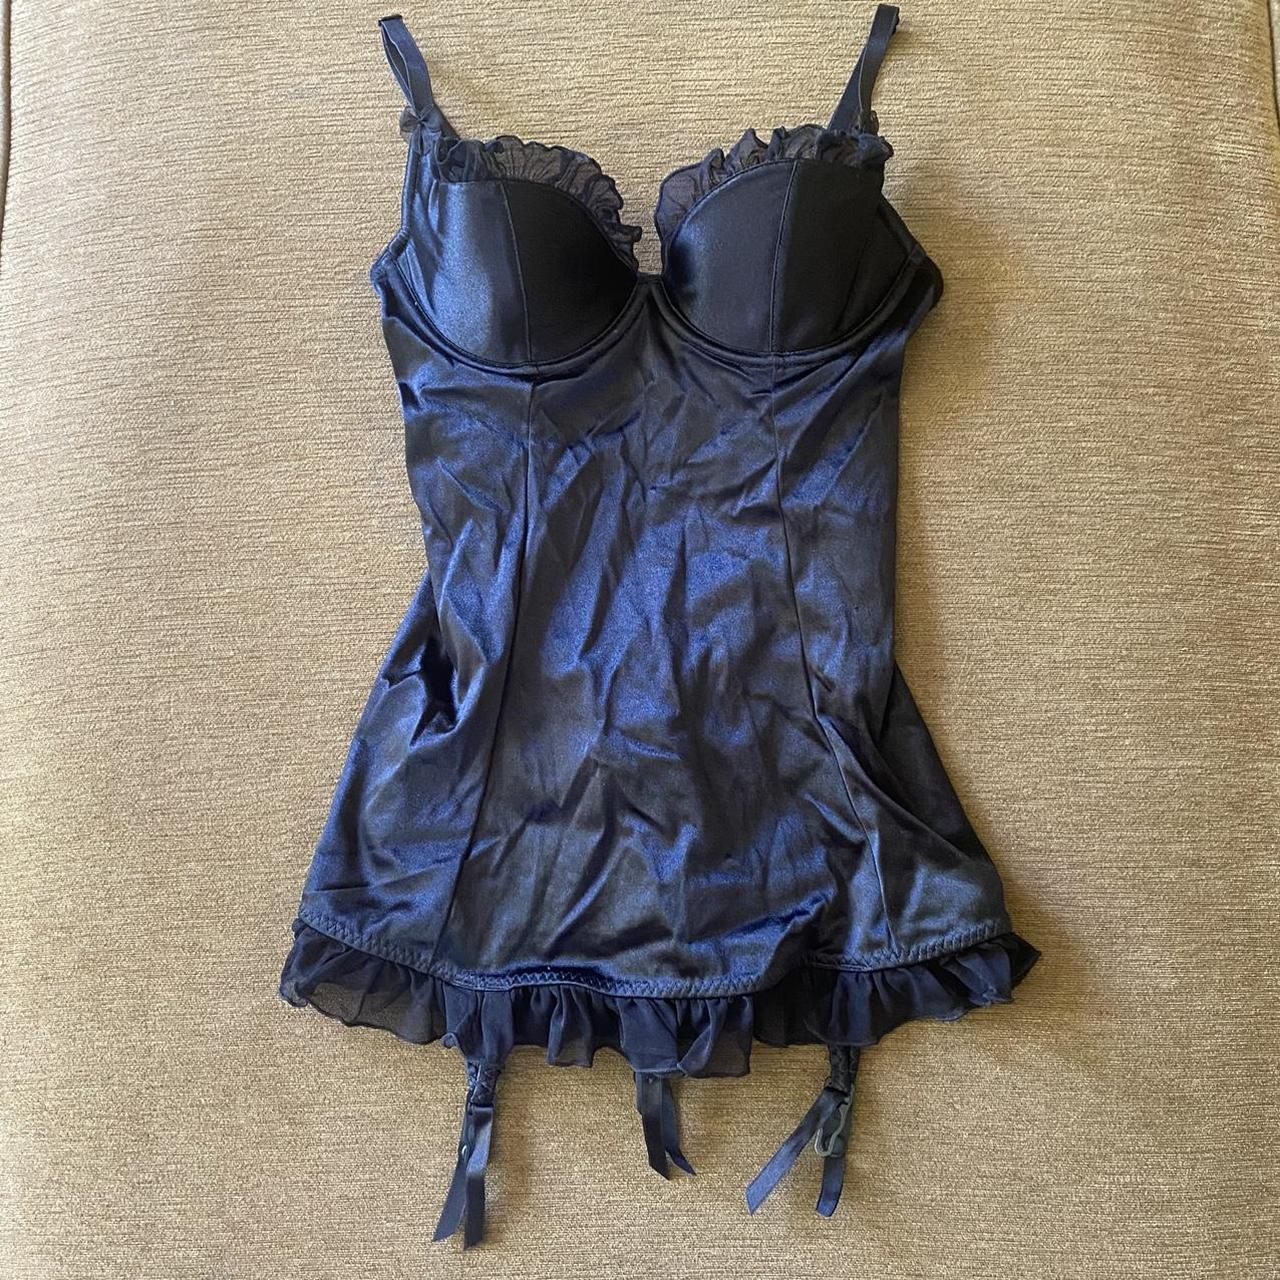 Victoria's Secret Lingerie Bag Black Satin Sexy Little Things Bras  Panties NEW